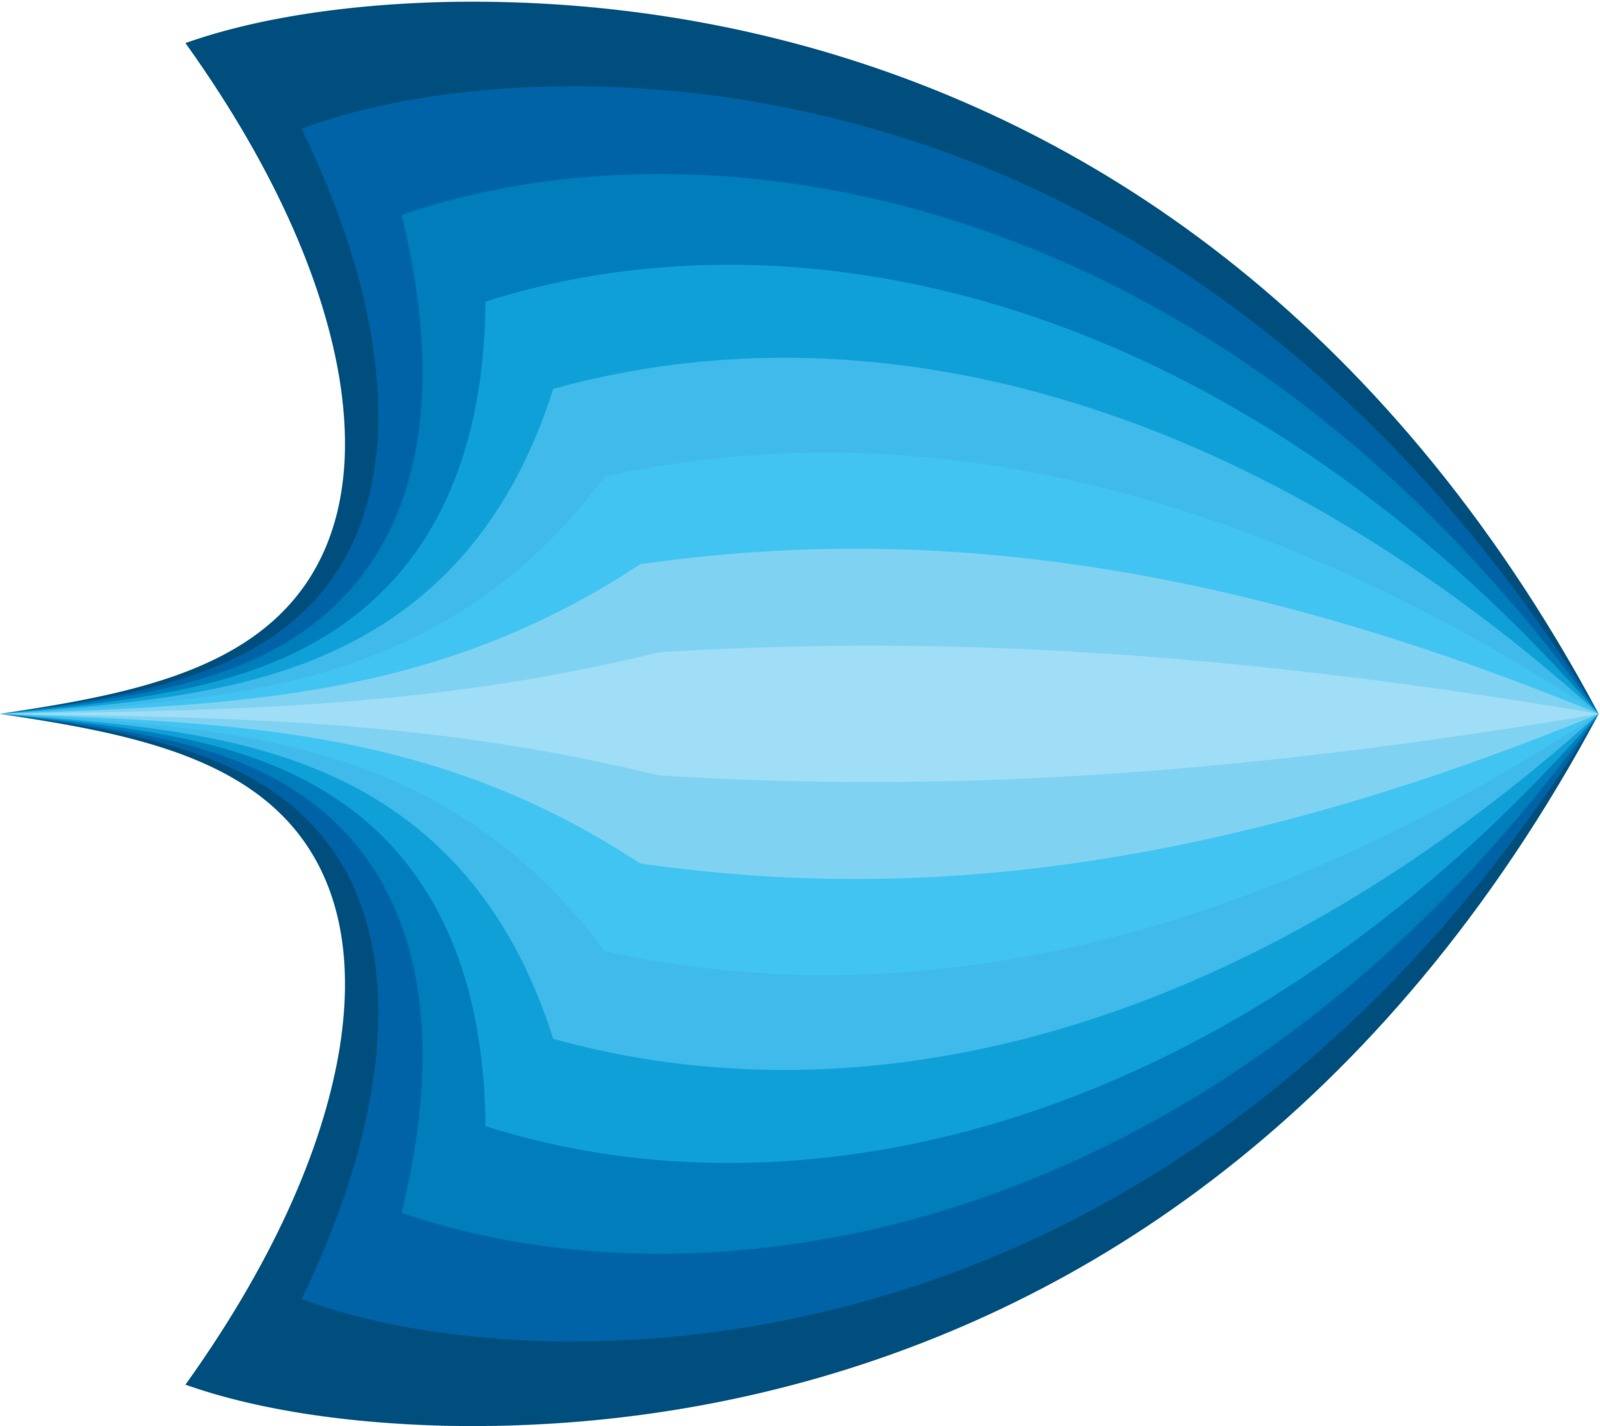 Aqua fish logo by bagiuiani